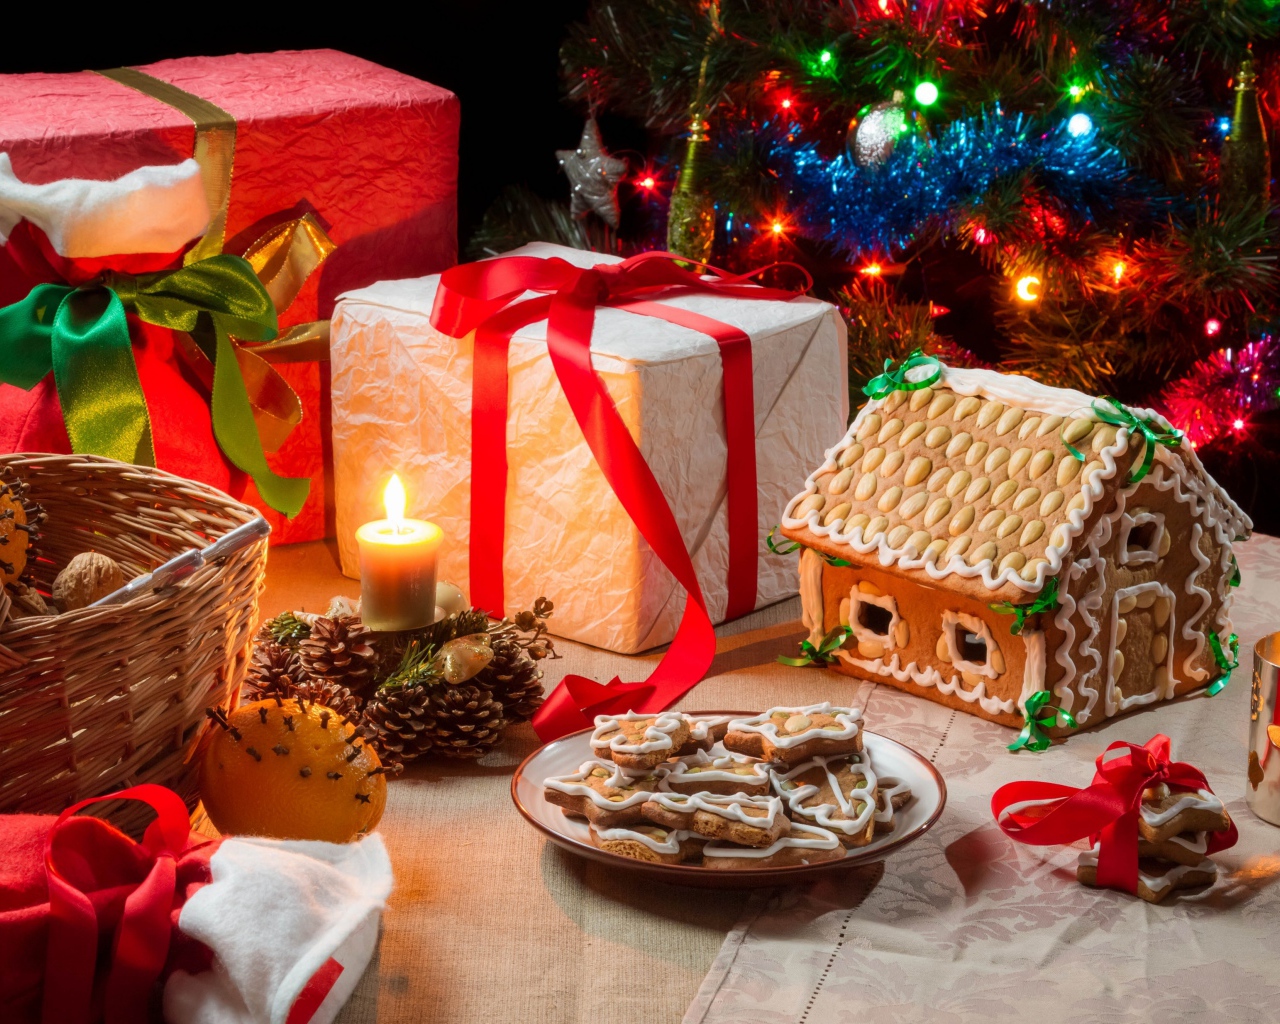 Угощение и подарки на Рождество